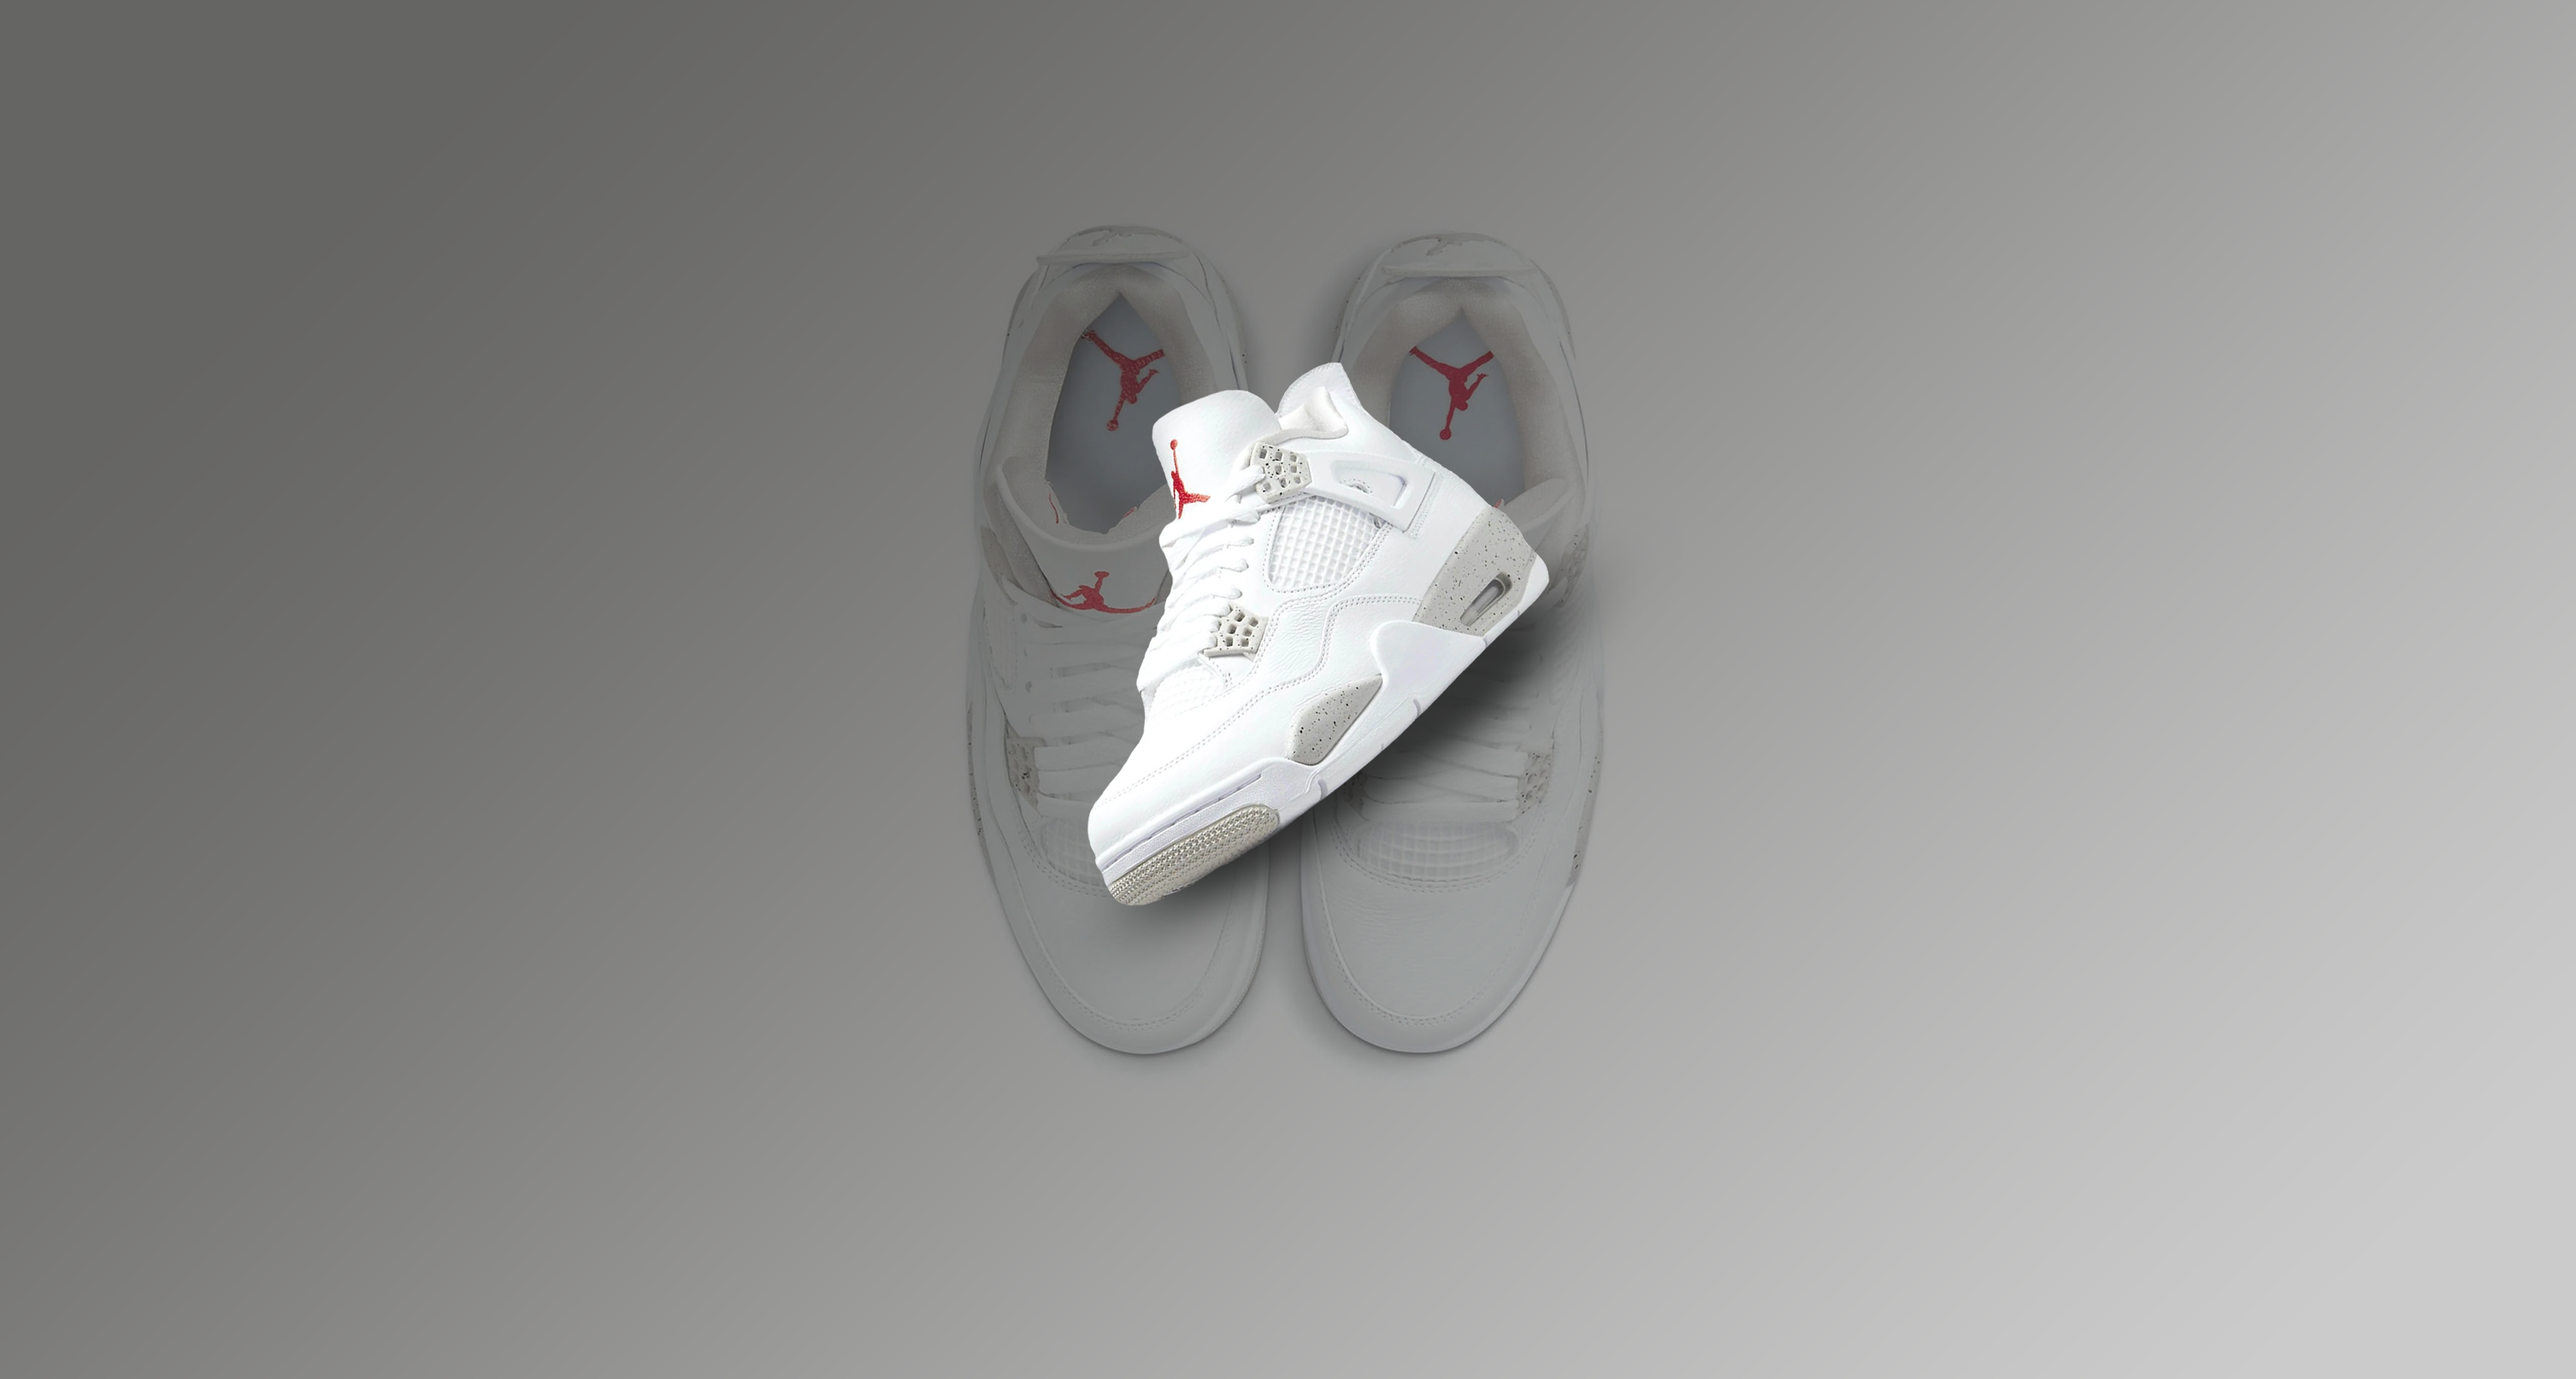 Jordan 3 Patchwork – The ShoeBox